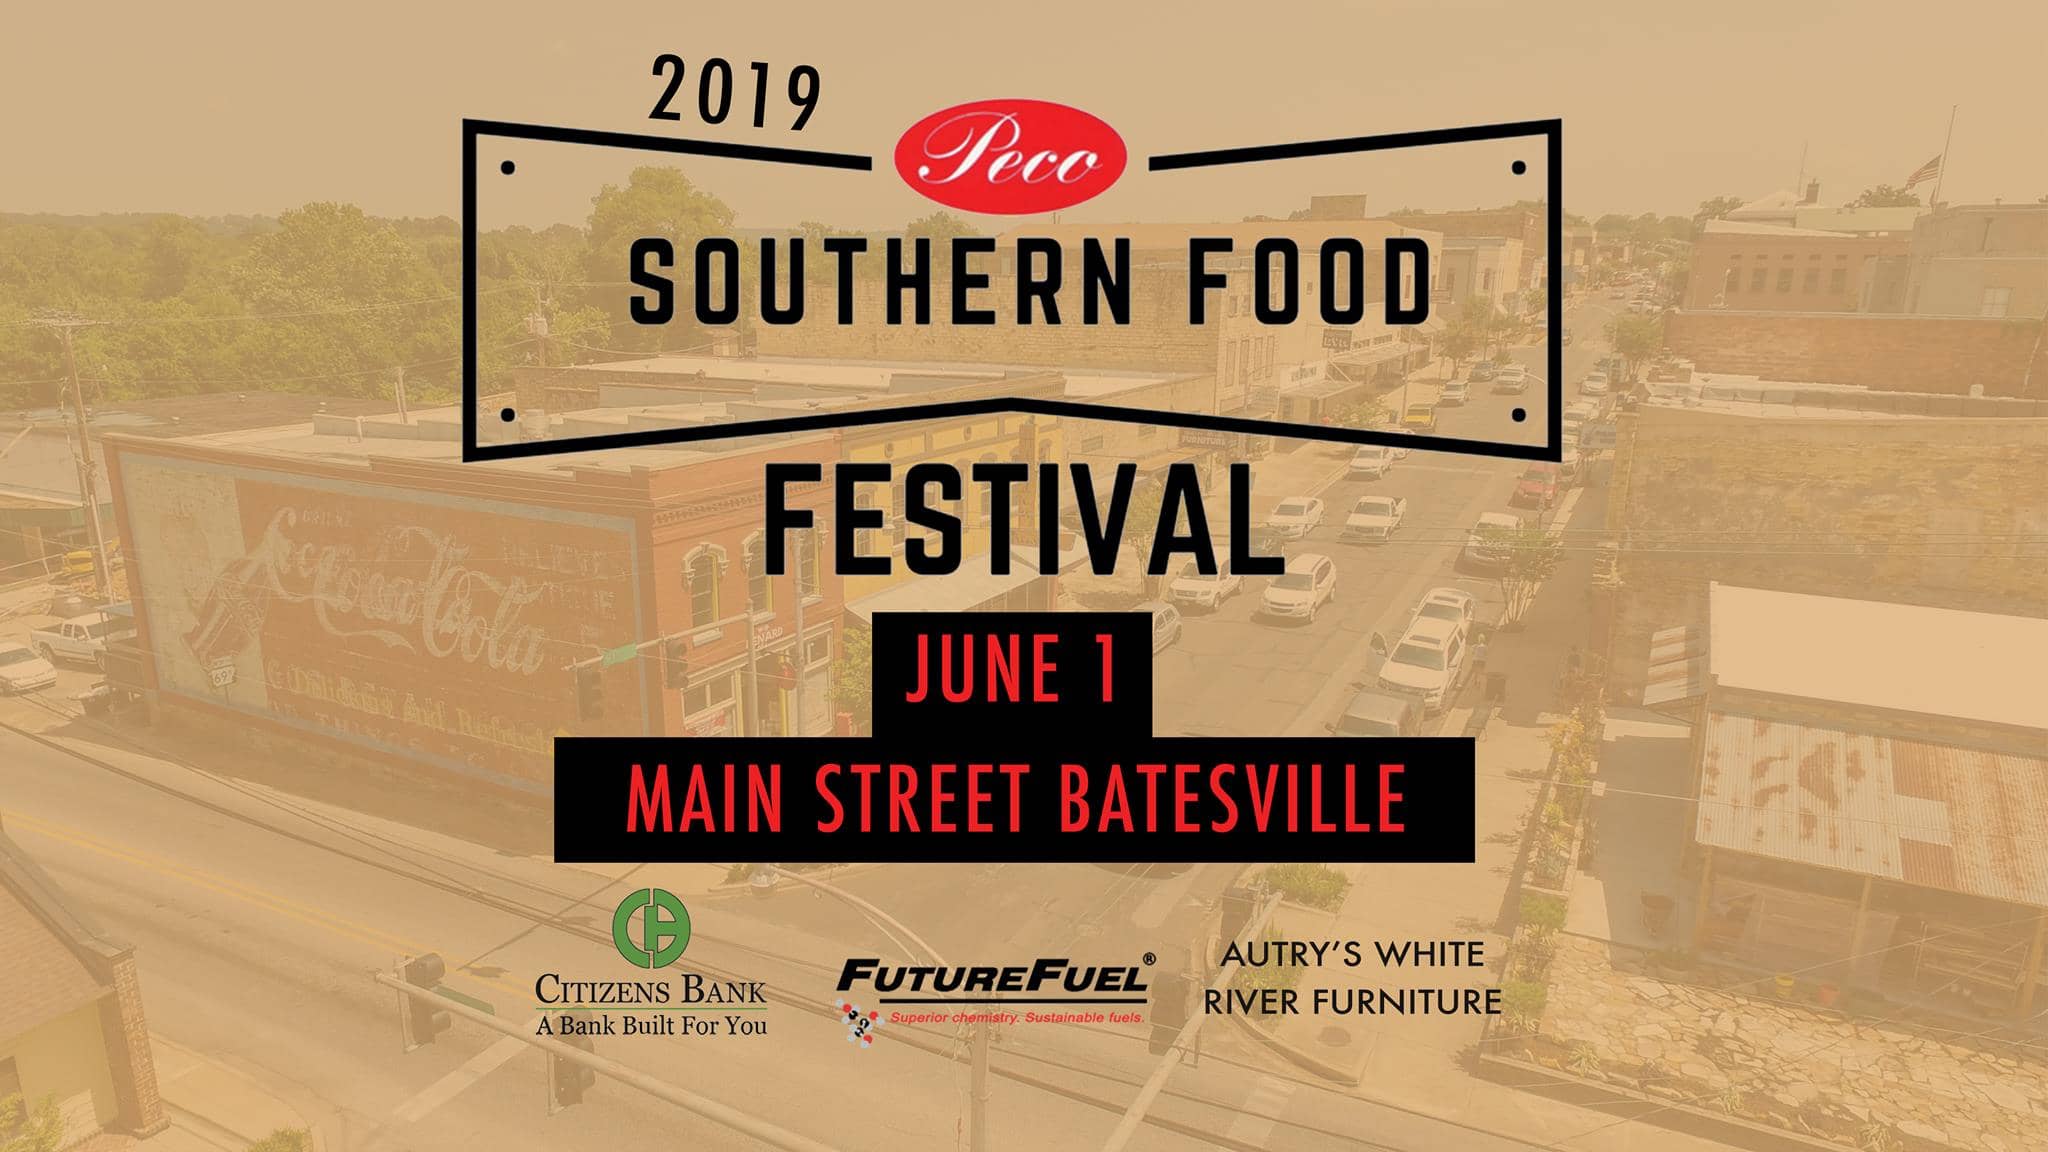 Southern Food Festival 2019.jpg